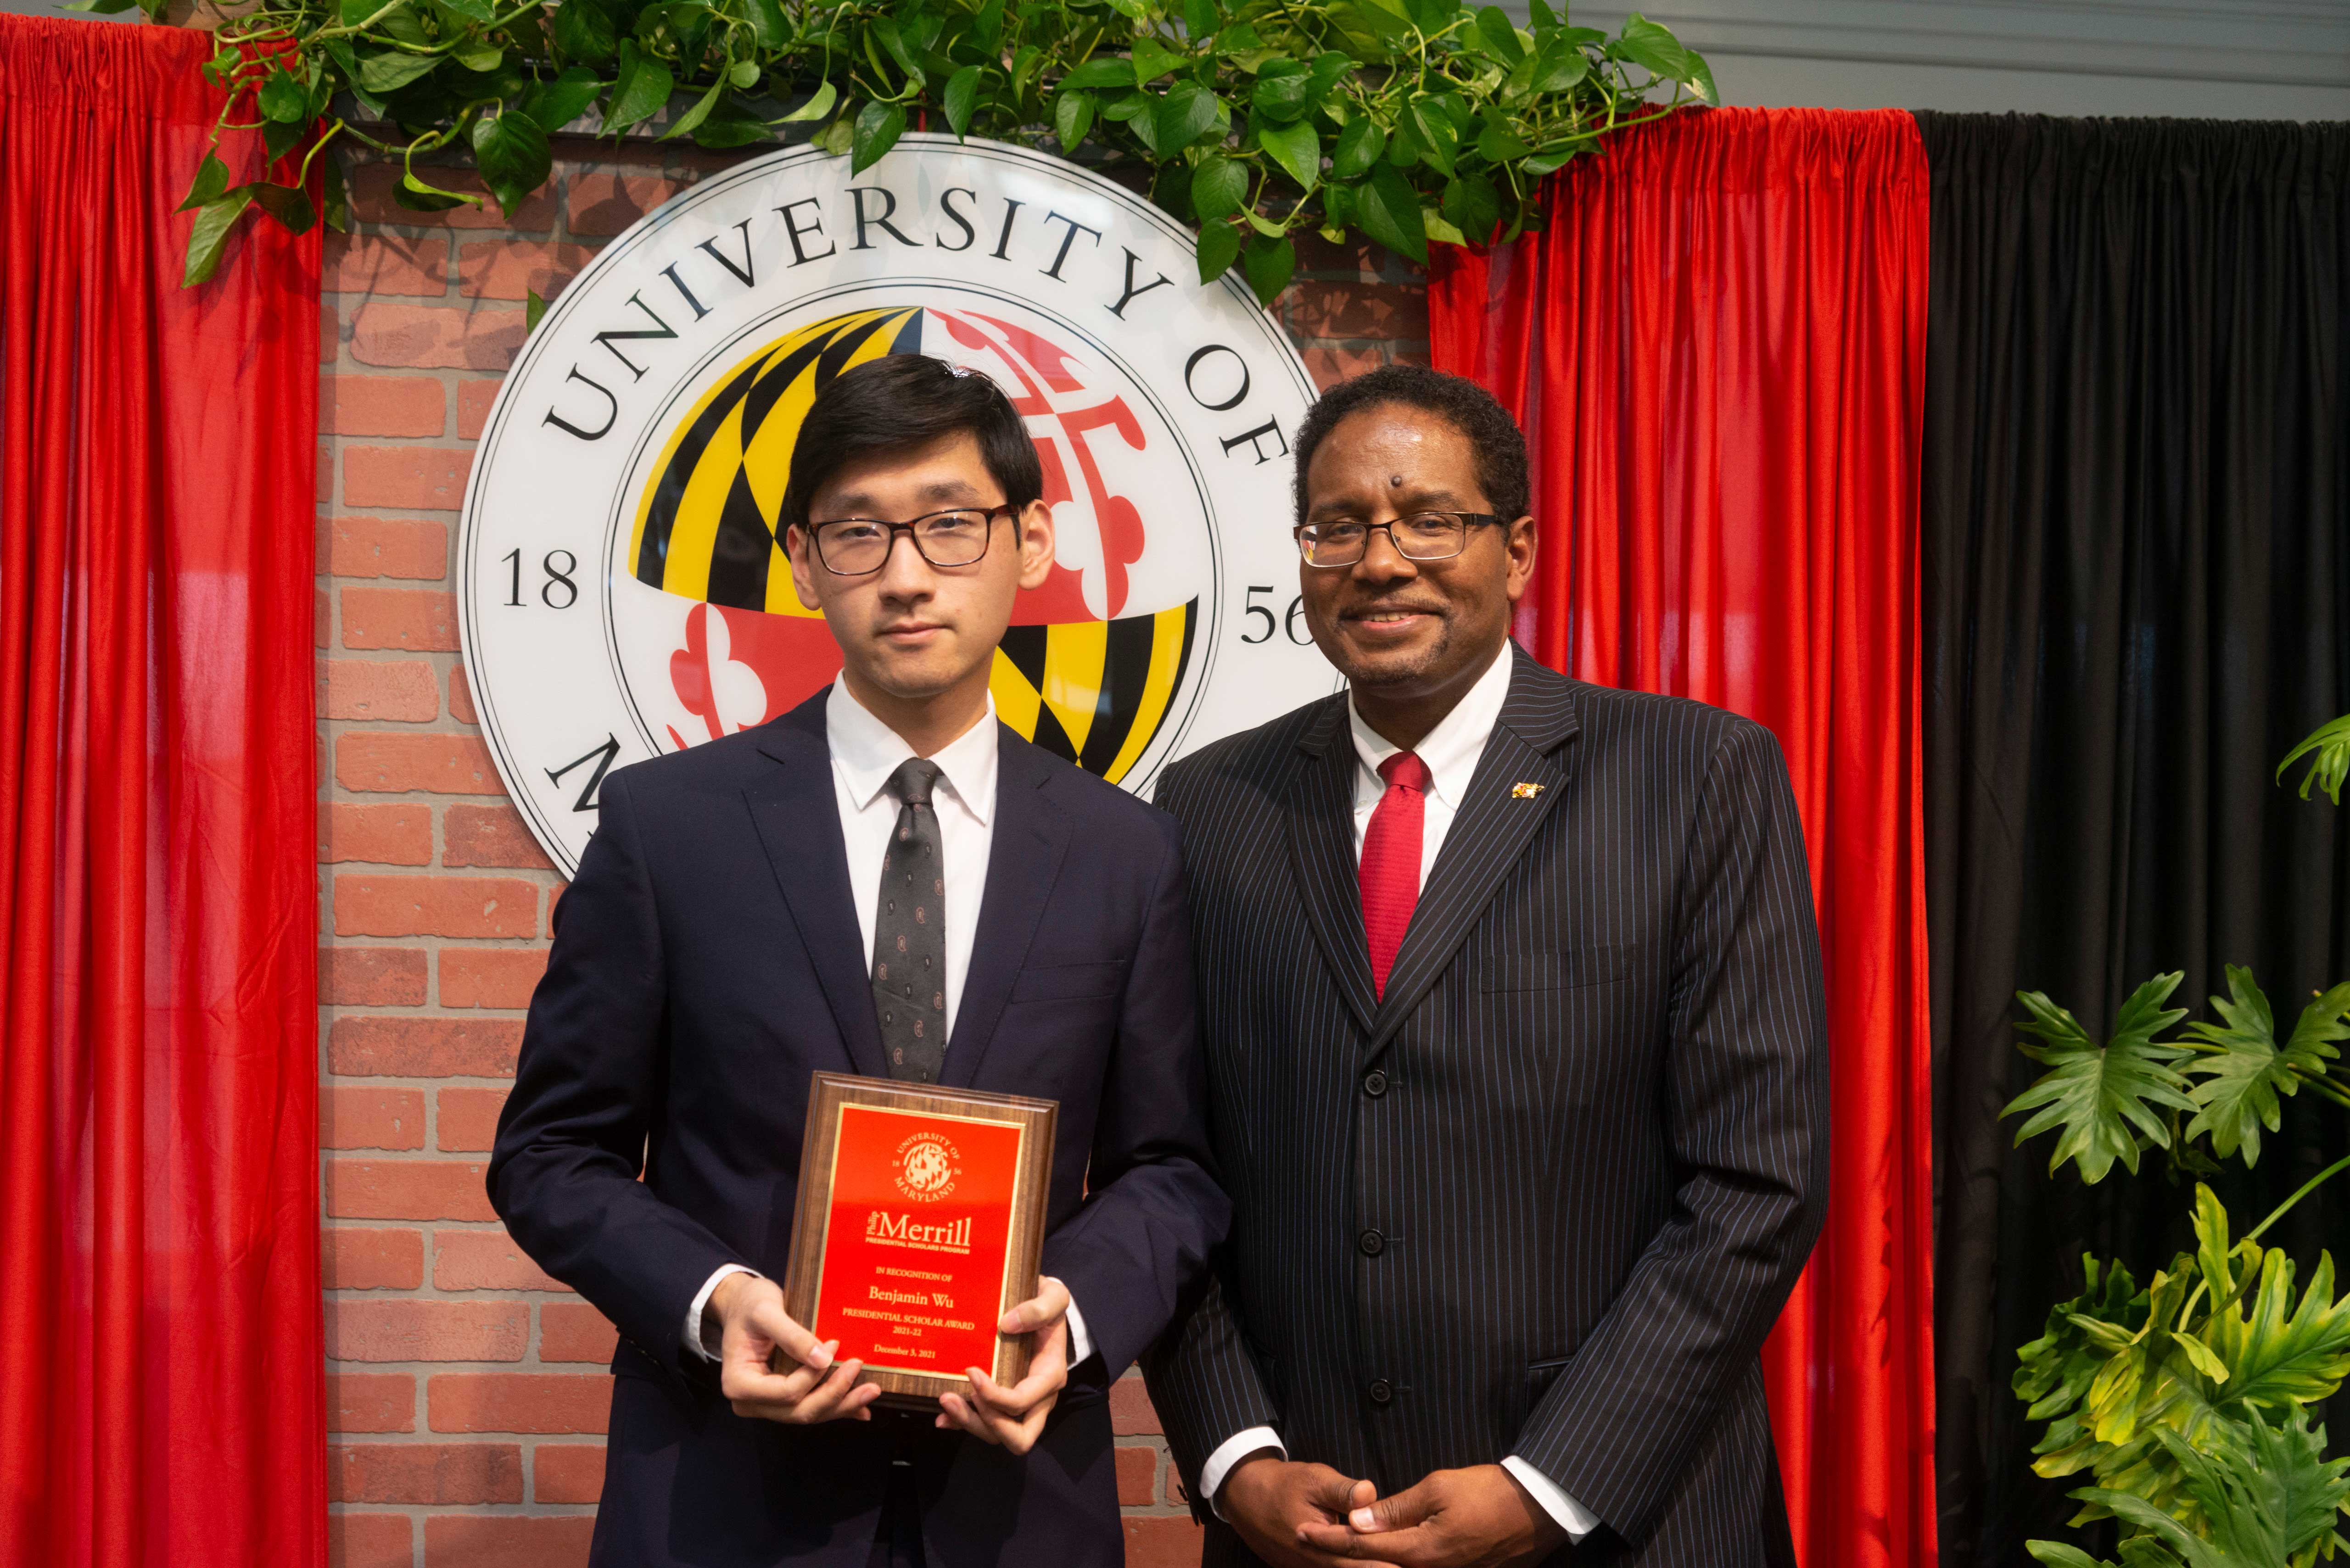 Merrill Scholar Benjamin Wu with President Pines